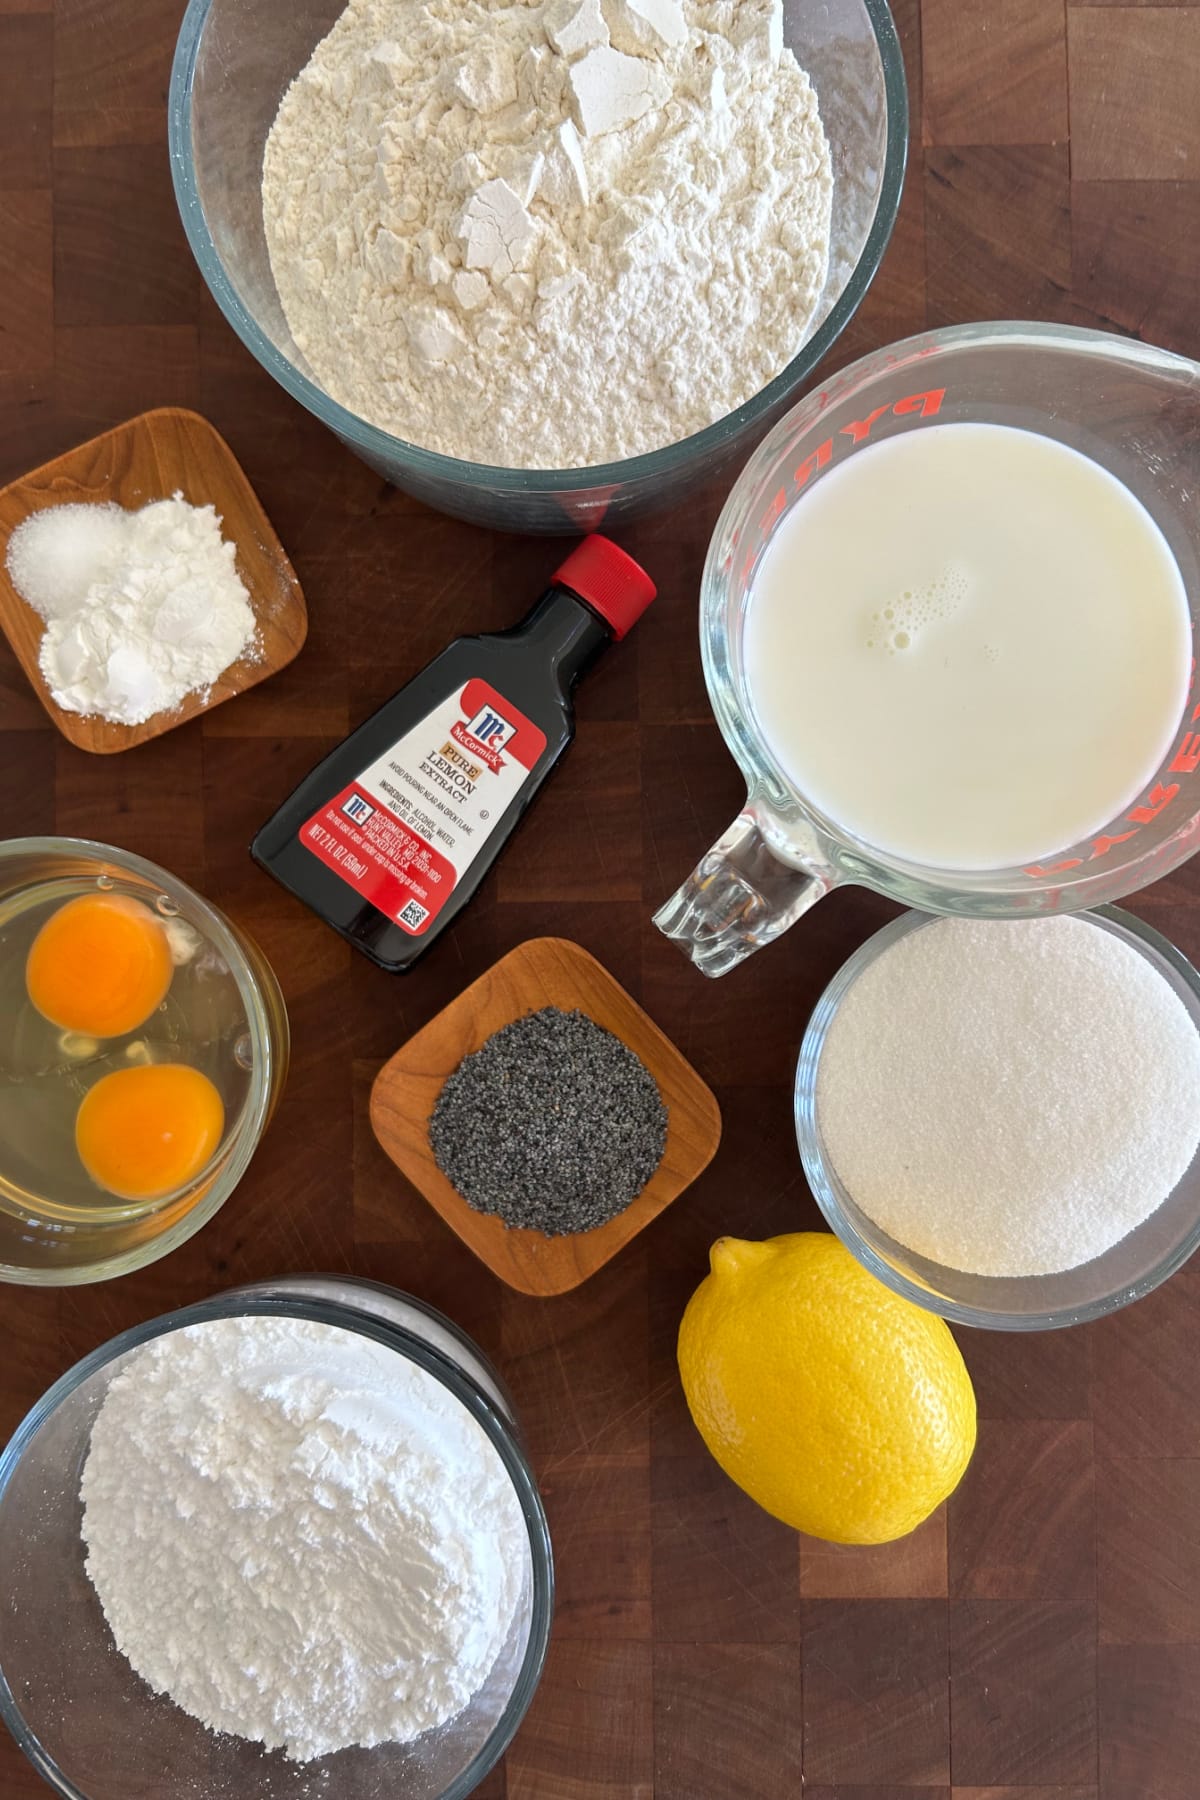 ingredients displayed for making lemon poppy seed muffins